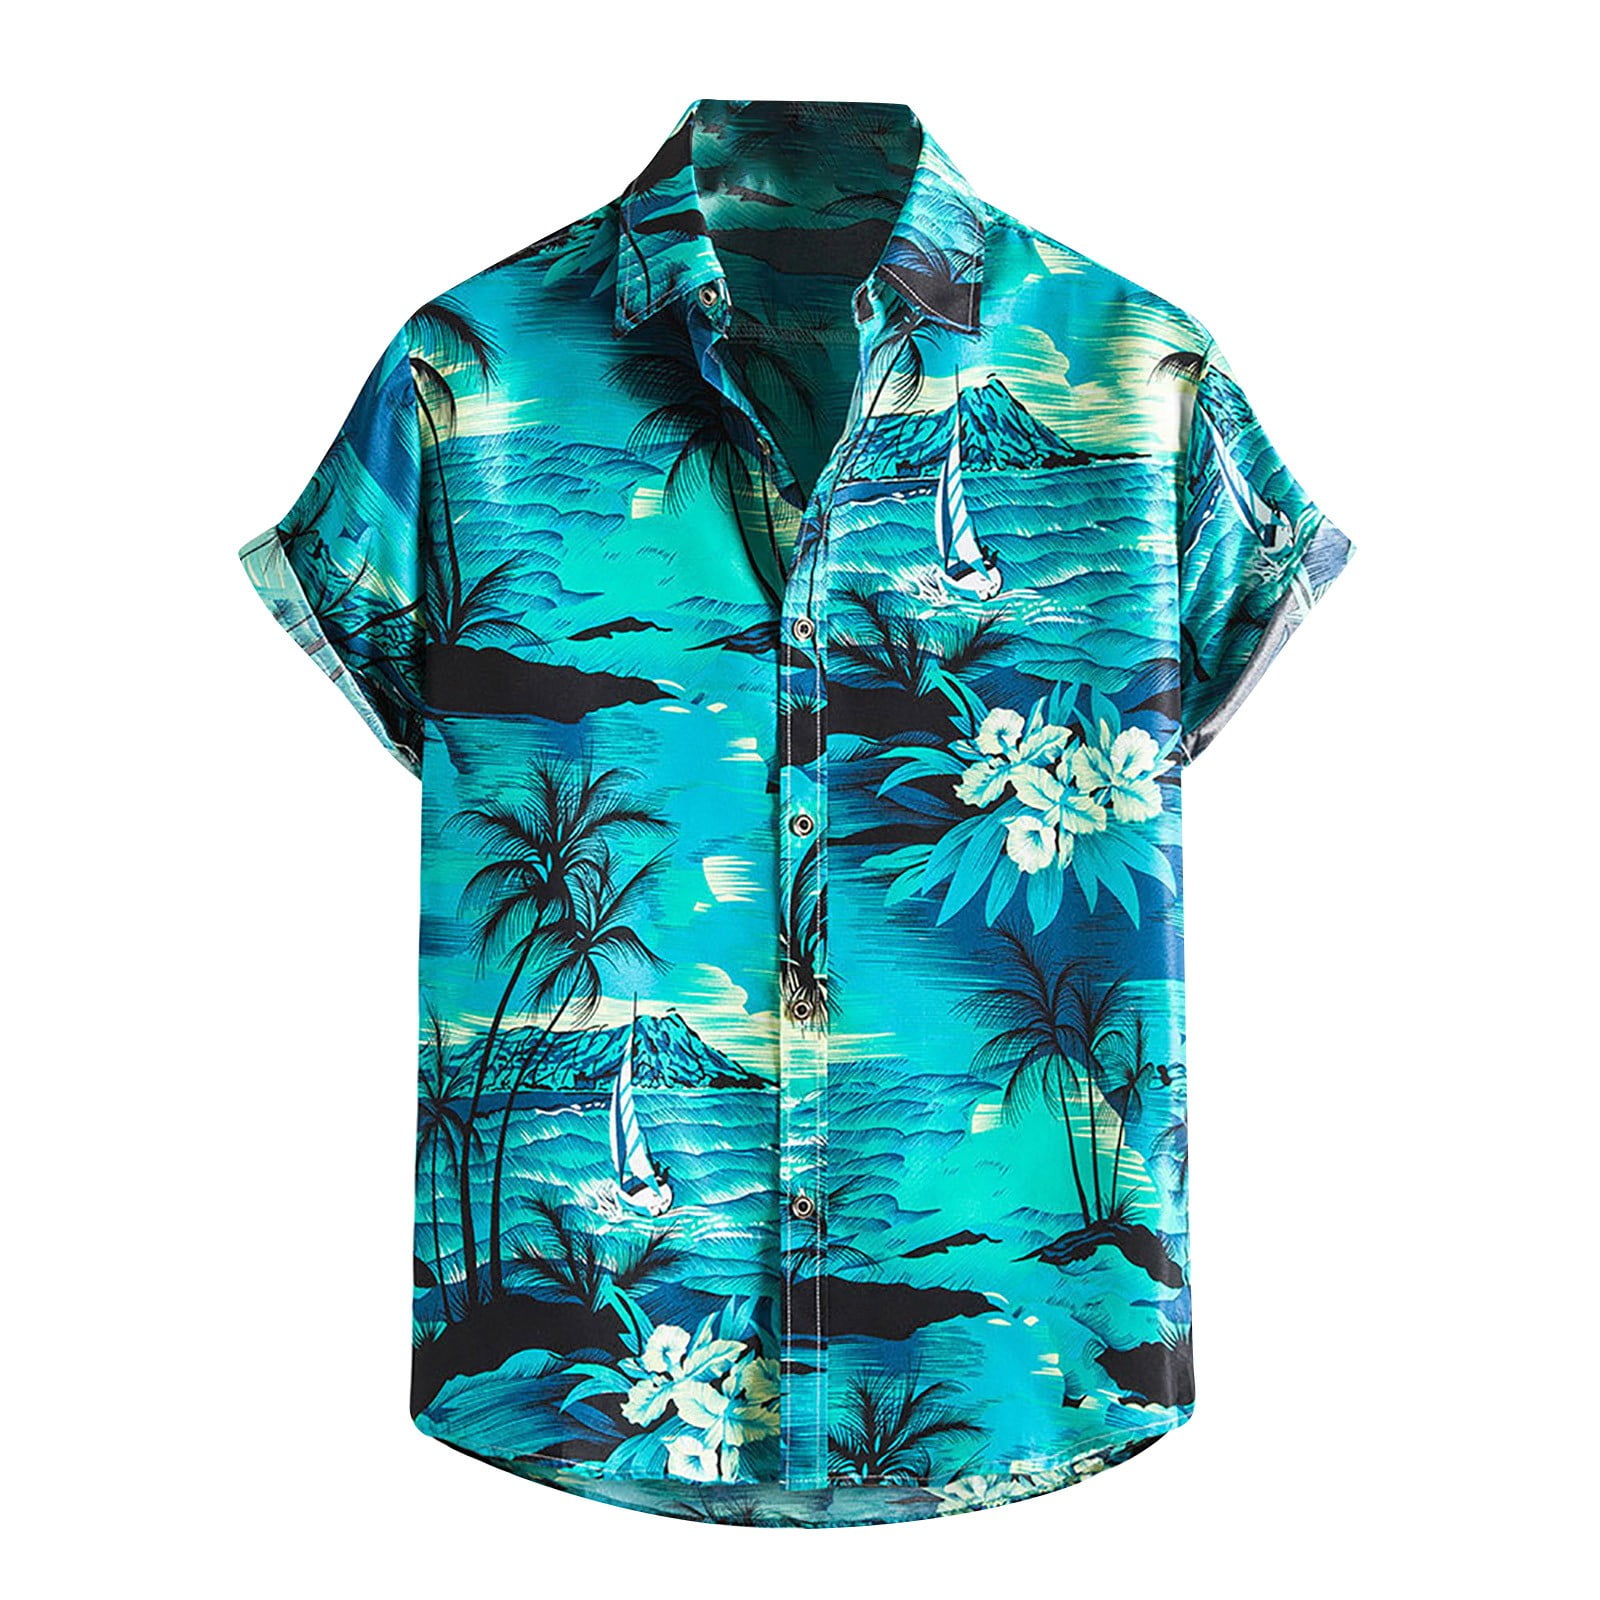 siliteelon Boys Hawaiian Shirts Short Sleeve Cotton Summer Beach Button Down Casual Aloha Luau Shirts for Kids 